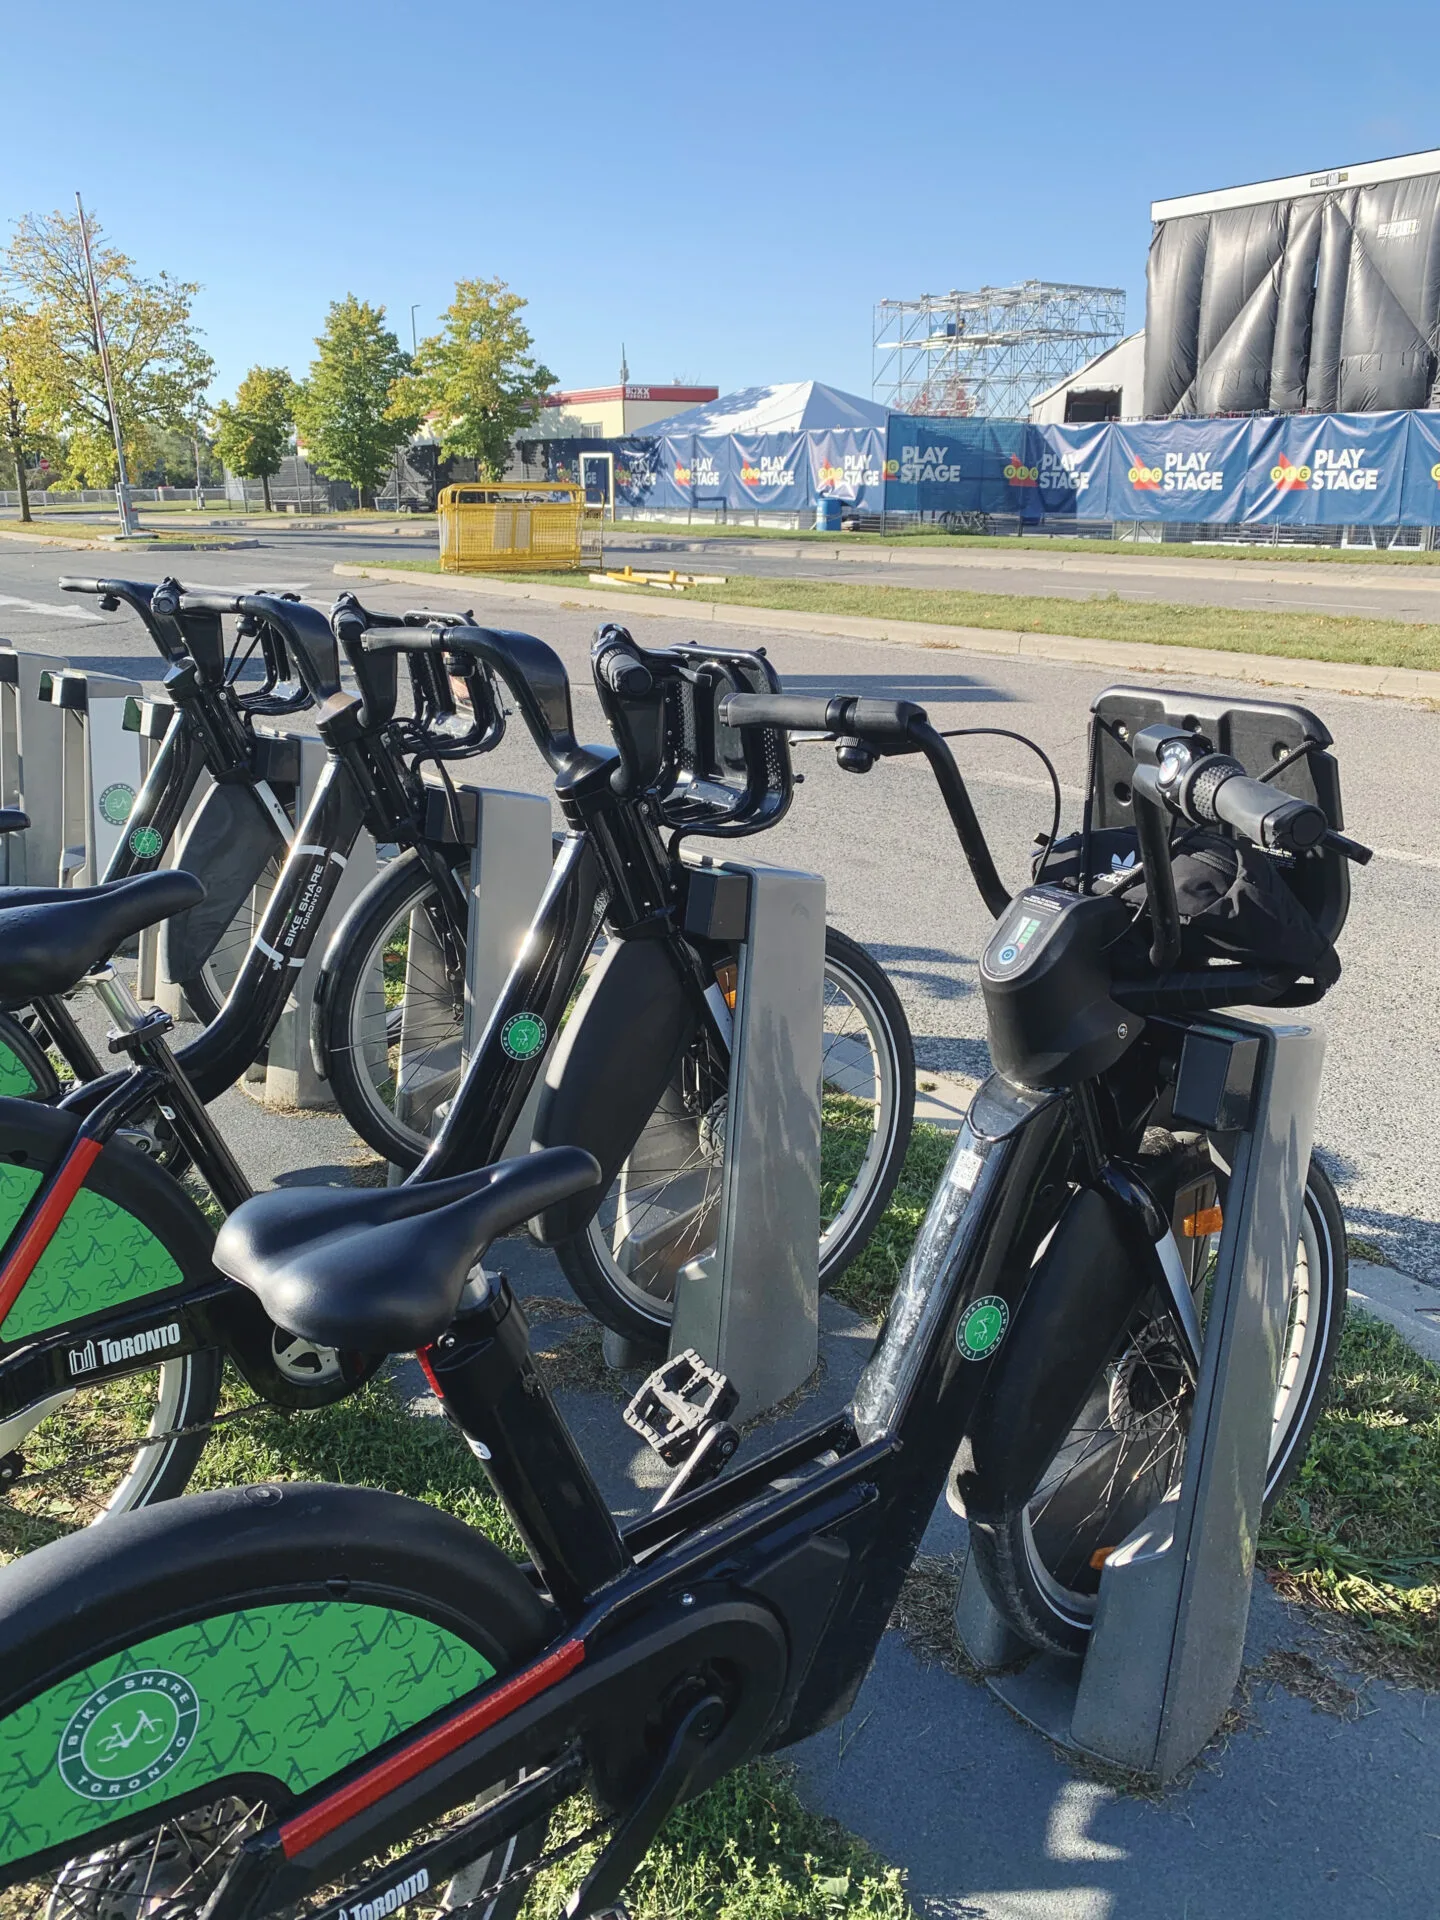 Bike Share electric bike rental at Ontario Place, Toronto